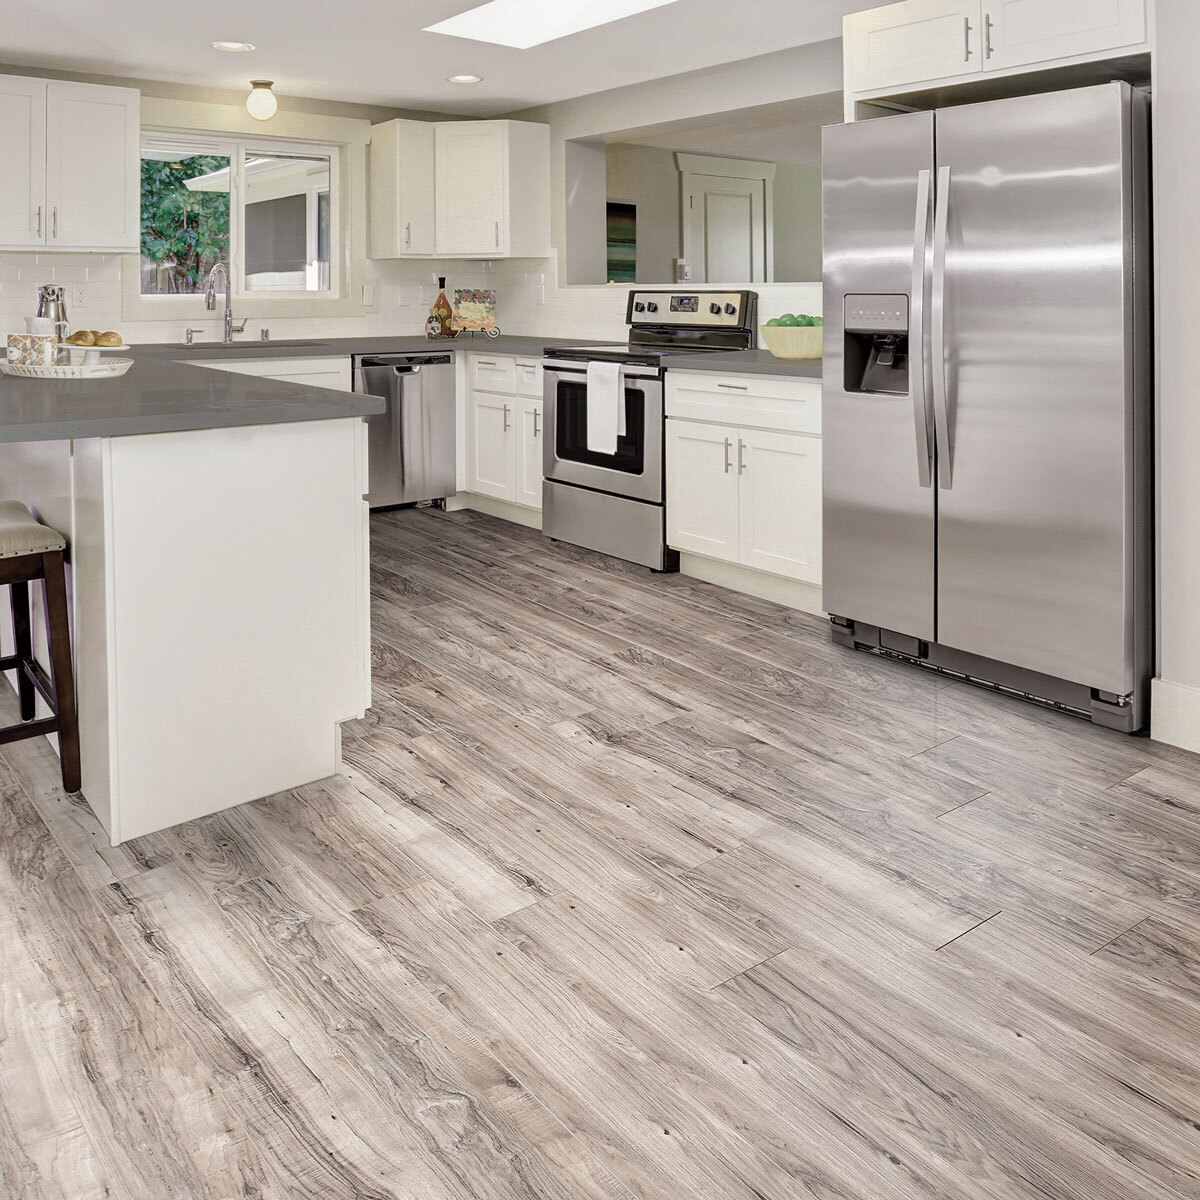 Ac5 Laminate Flooring, Light Grey Laminate Flooring In Kitchen